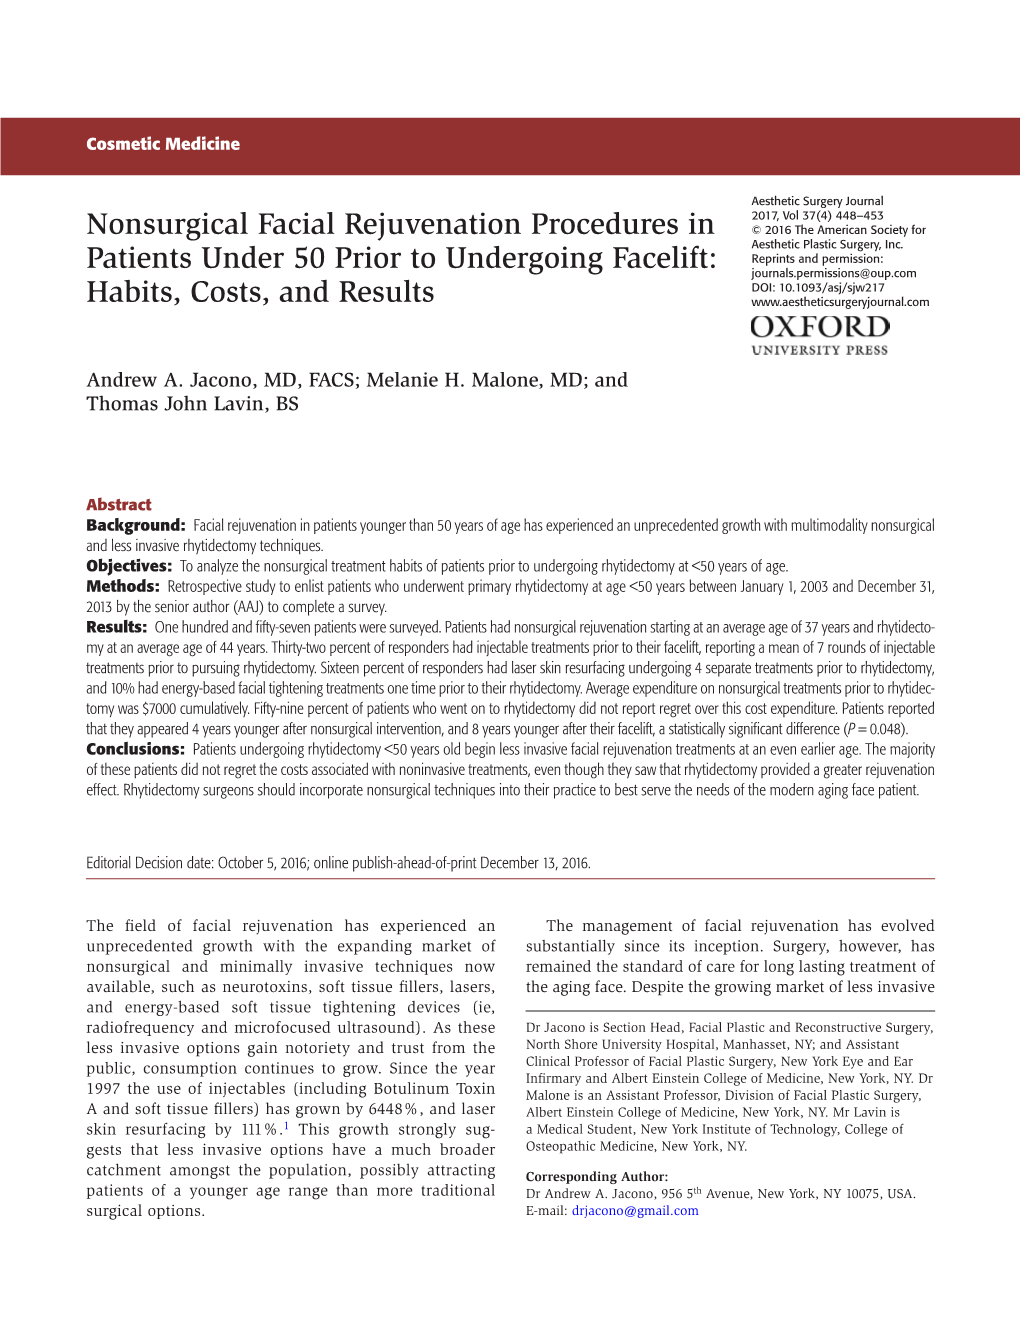 Nonsurgical Facial Rejuvenation Procedures in Patients Under 50